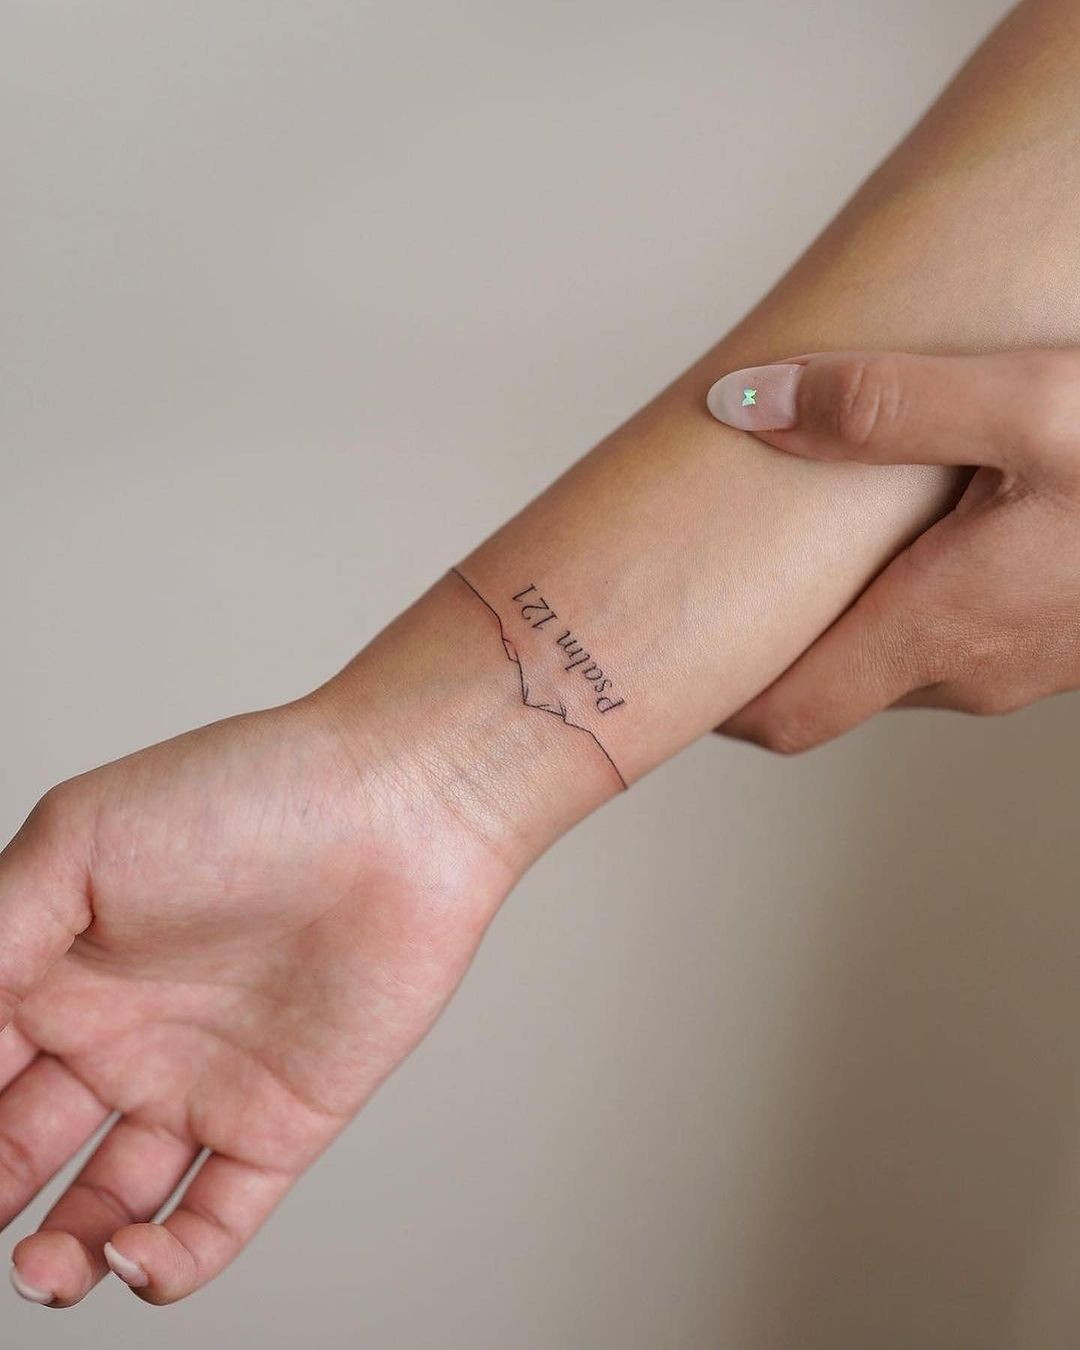 tatuagem minimalista com significado religioso 